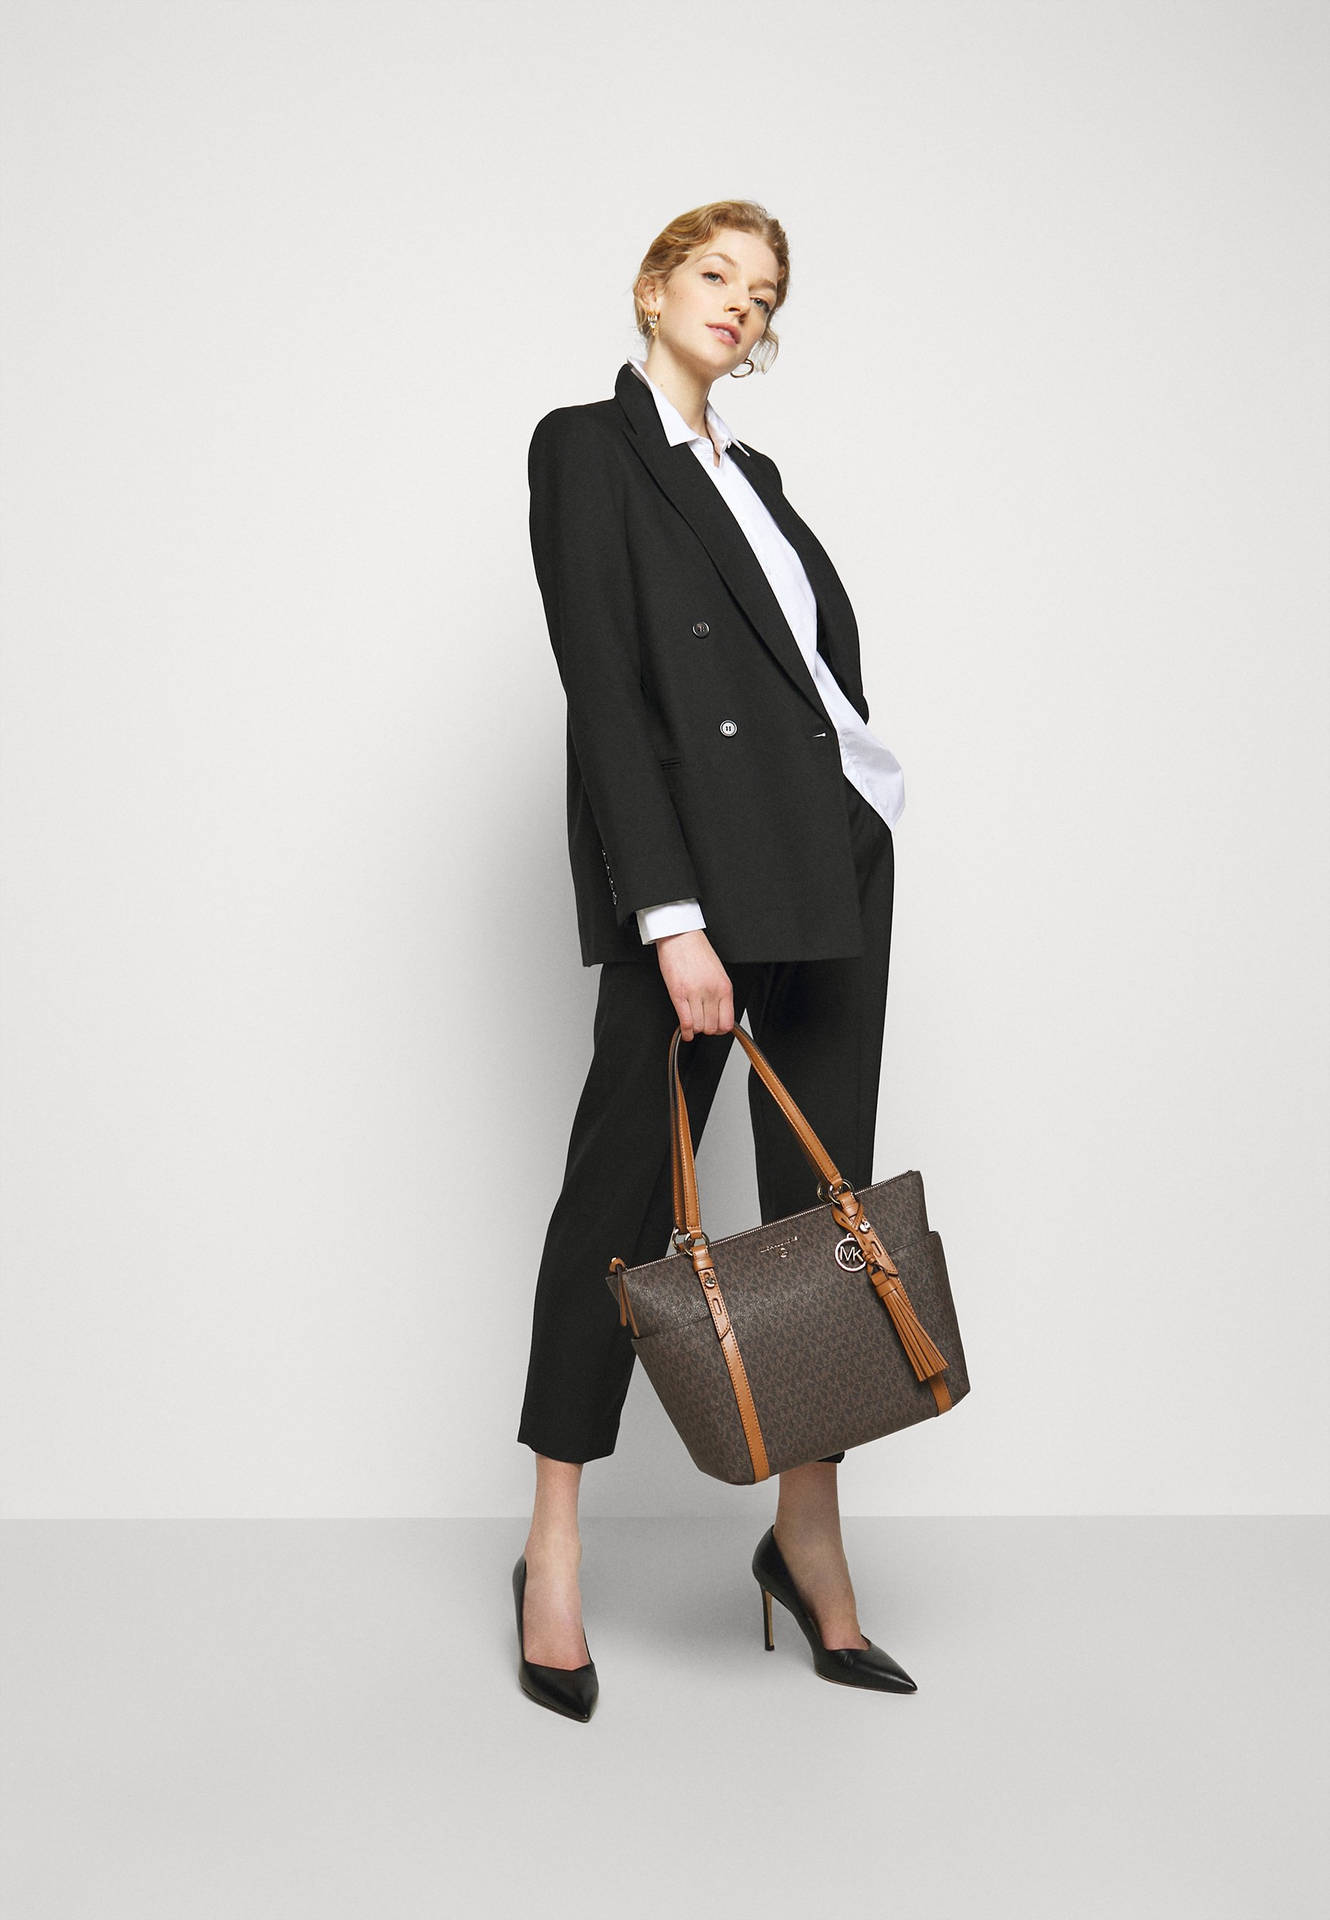 Michael Kors Bag With Female Model